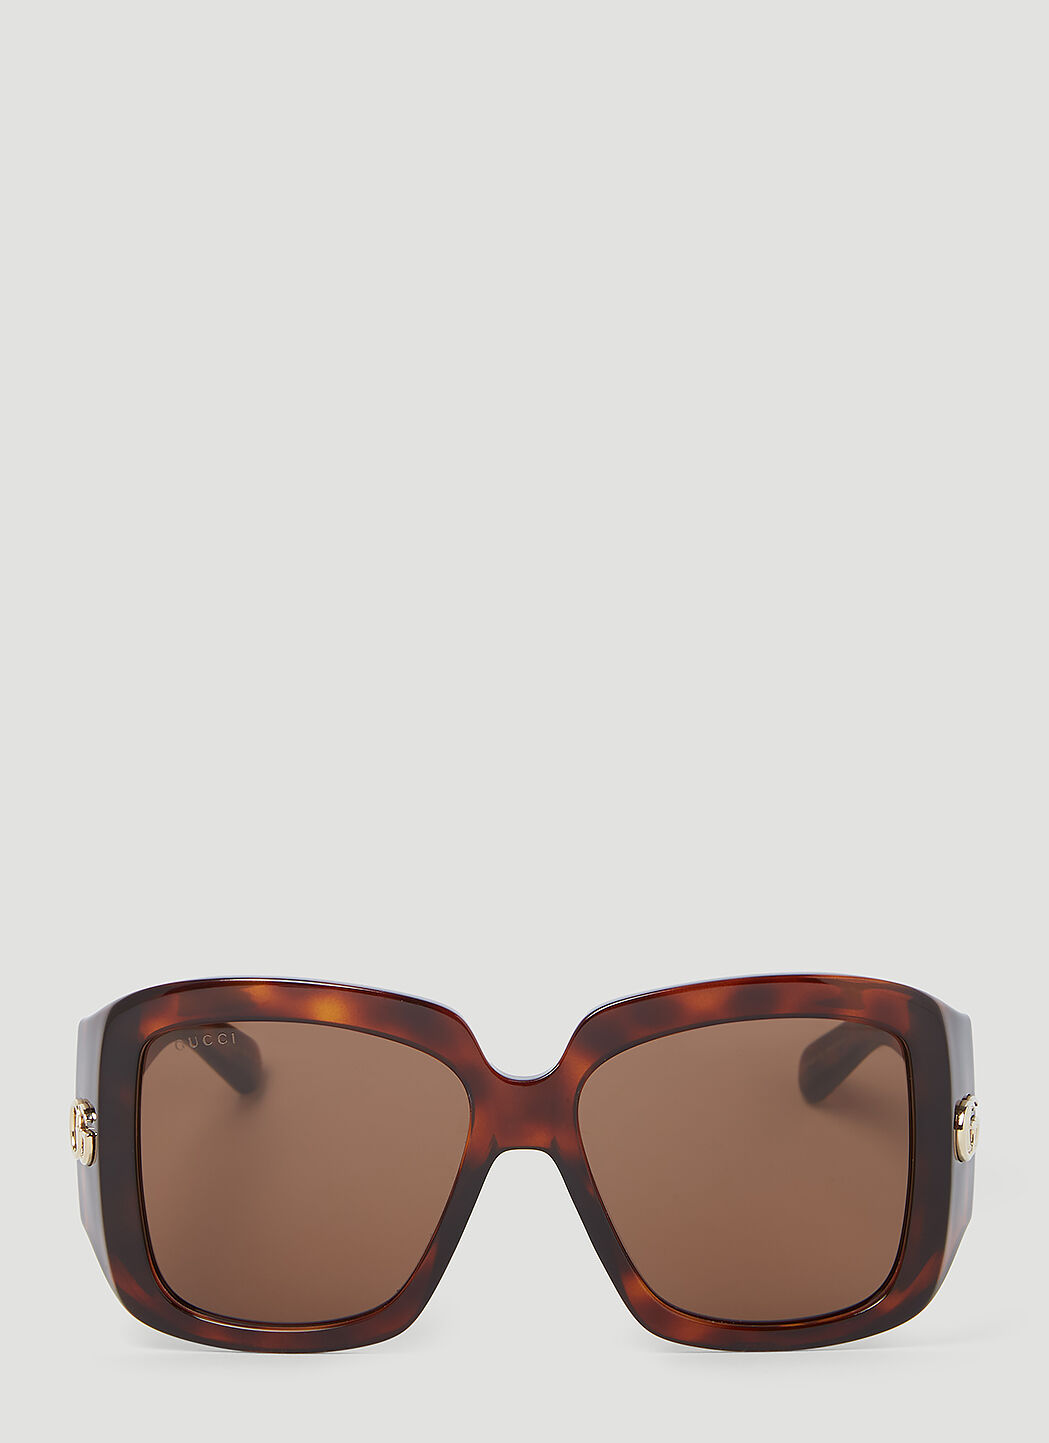 Gucci Brown Shaded Square Ladies Sunglasses - Walmart.com